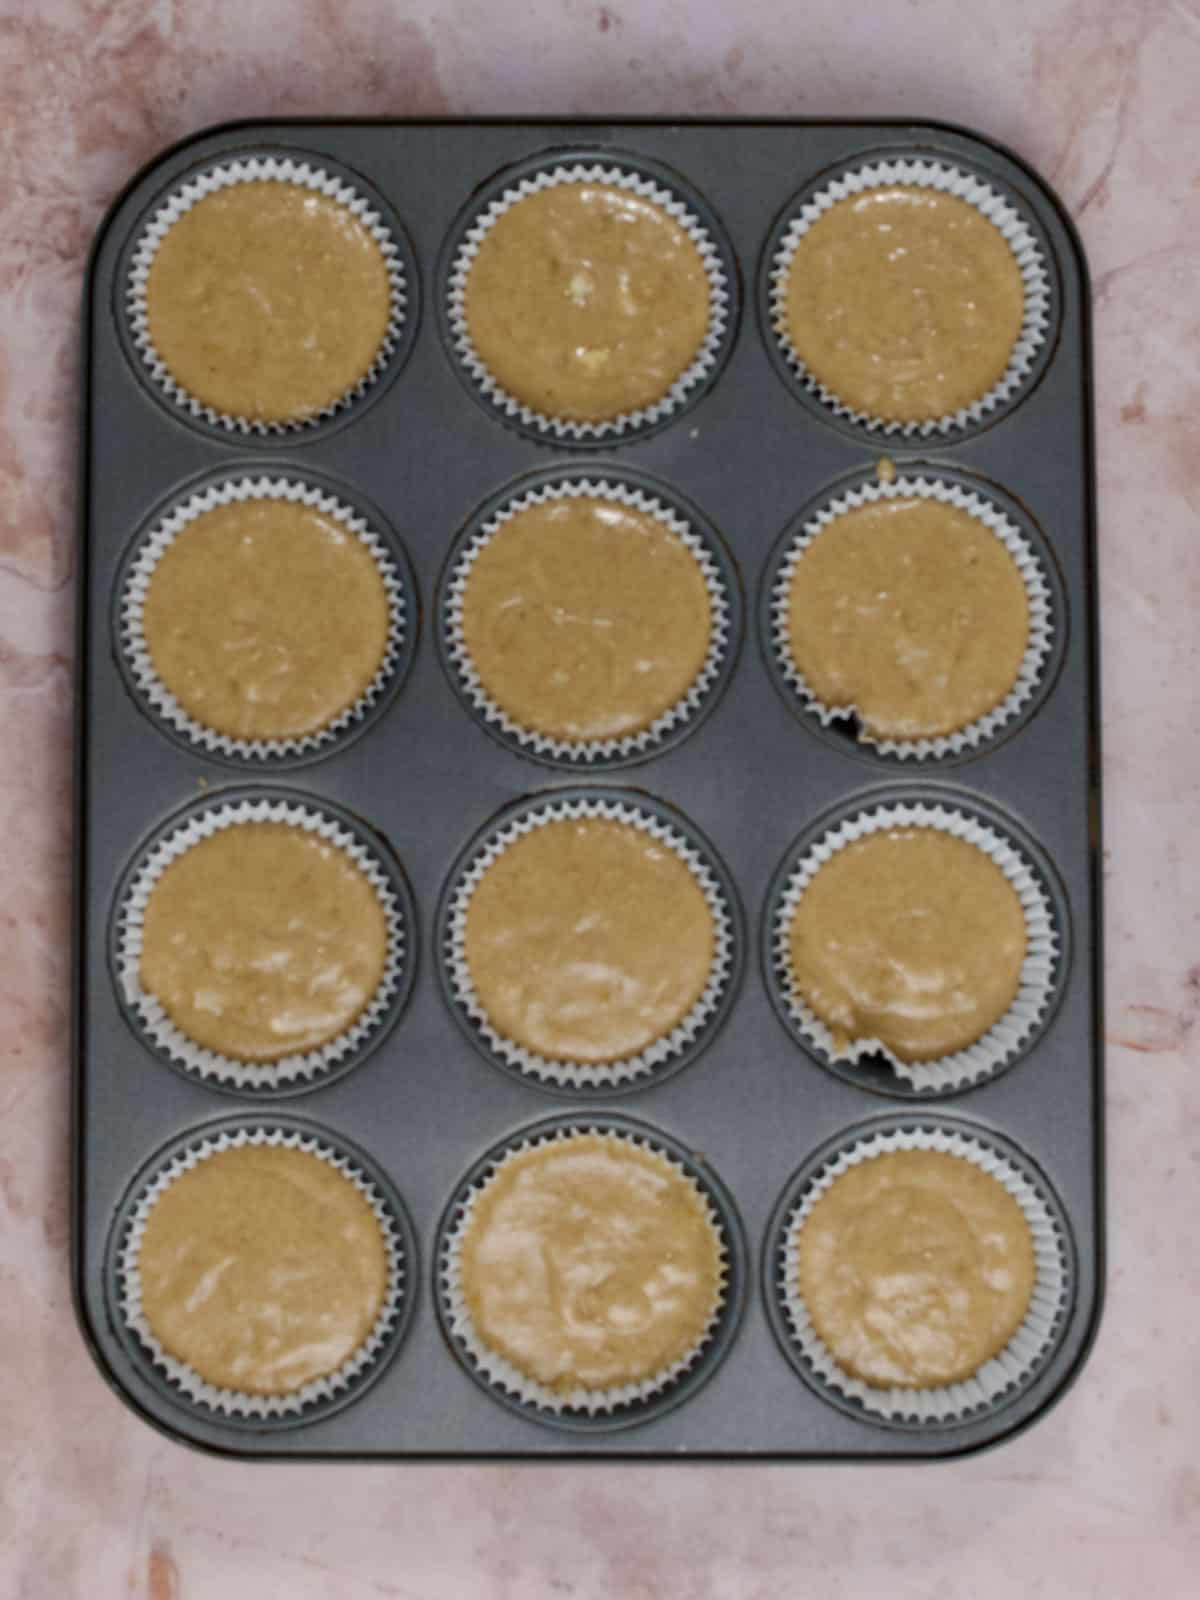 banana spice cake batter in cupcake liners in a cupcake pan